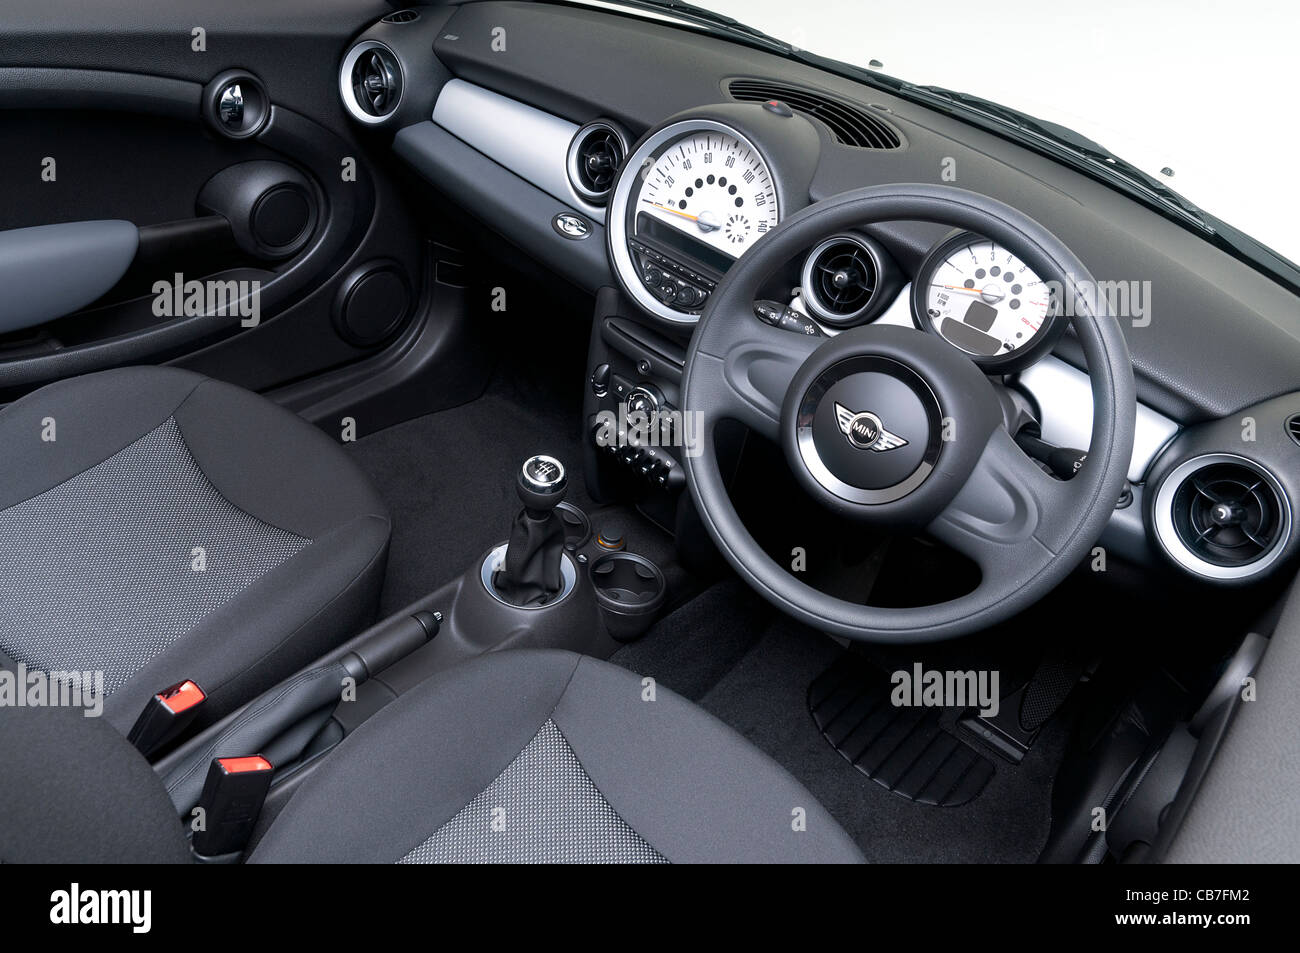 2011 Mini One Cabrio Innenausstattung Stockfotografie - Alamy